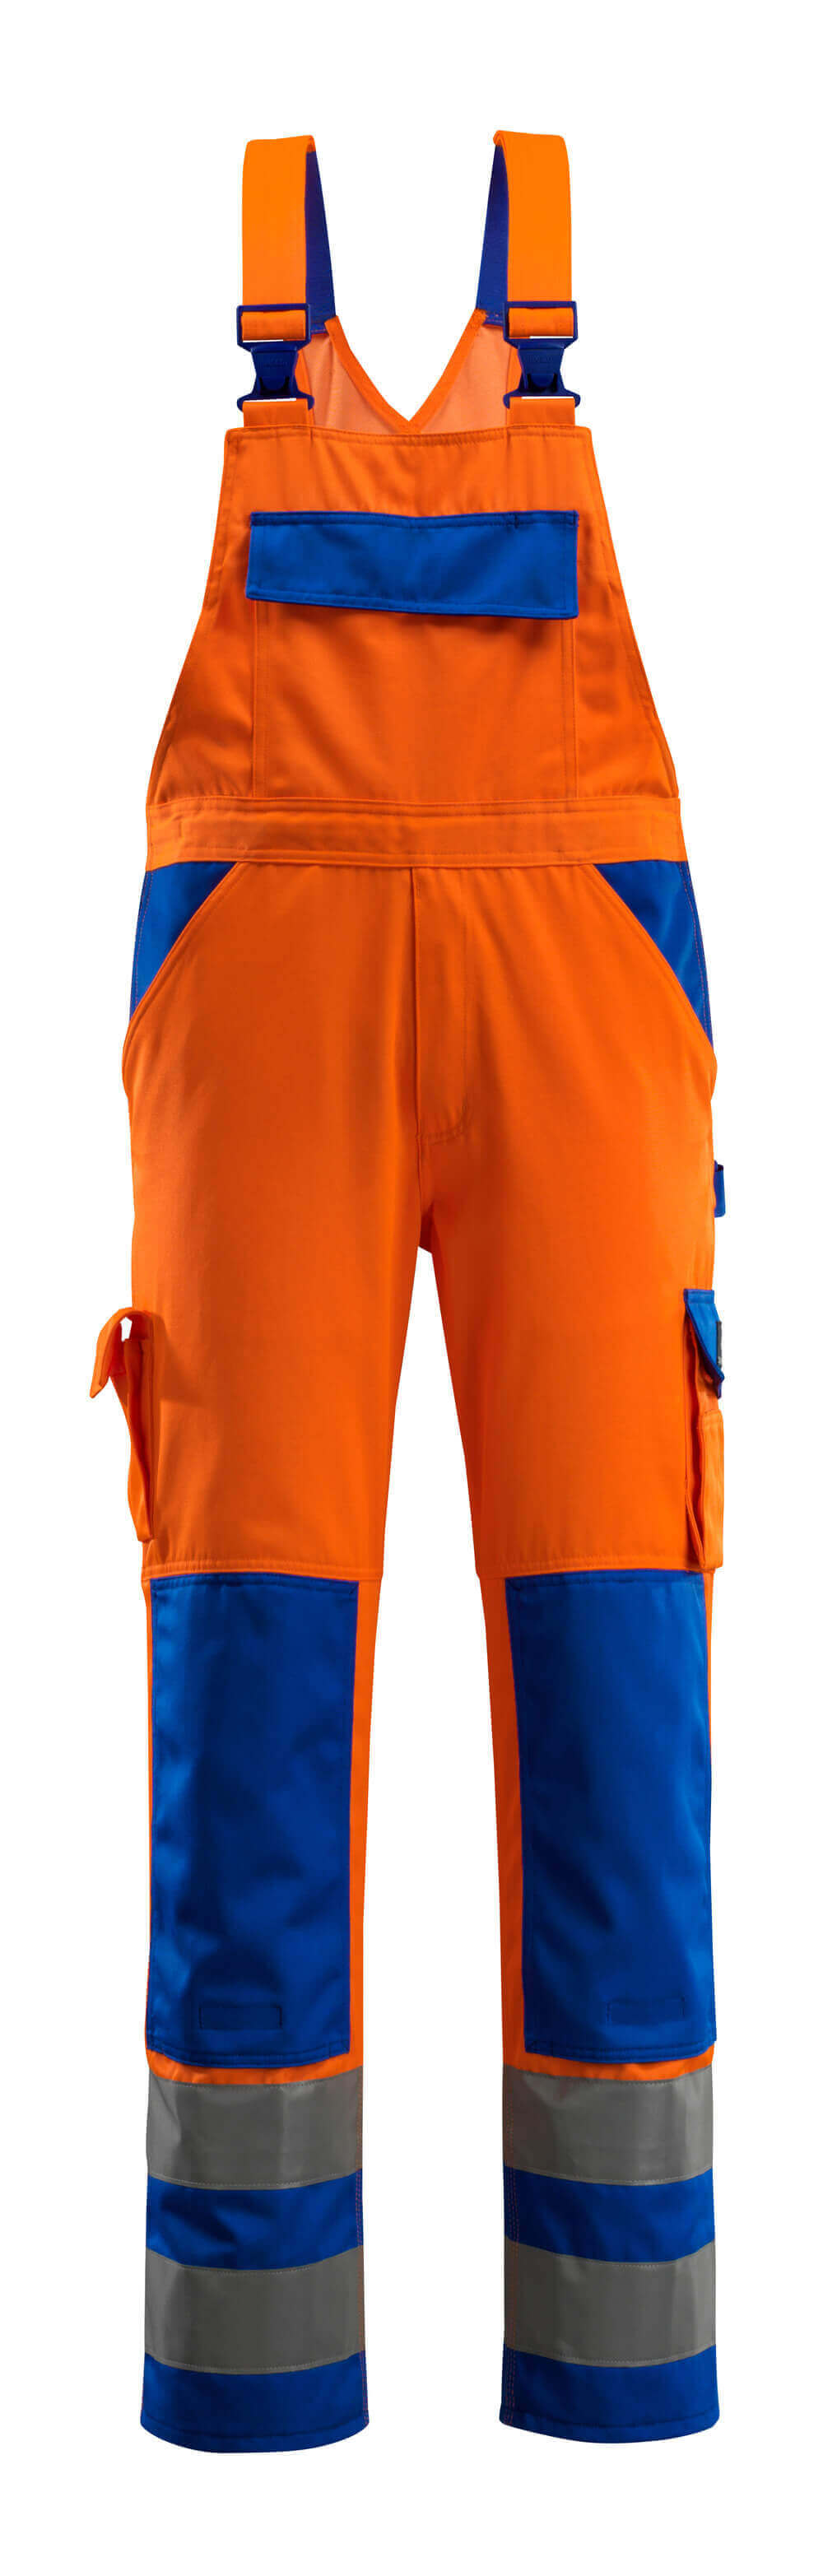 Mascot SAFE COMPETE  Barras Bib & Brace with kneepad pockets 07169 hi-vis orange/royal